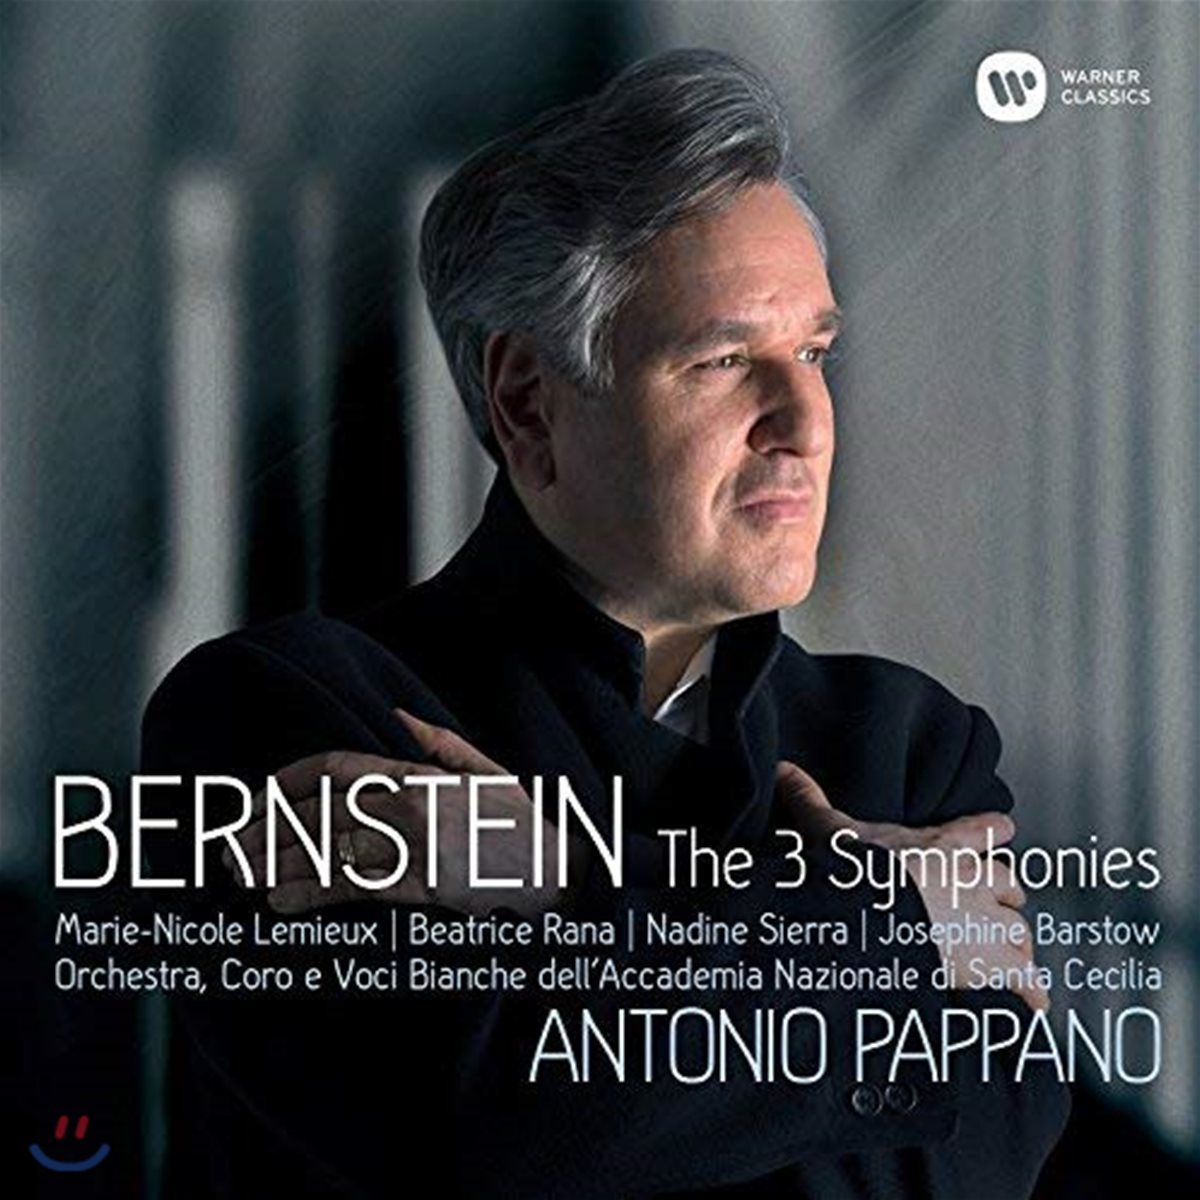 Antonio Pappano 레너드 번스타인: 교향곡 1-3번 (Leonard Bernstein: The 3 Symphonies) 안토니오 파파노, 산타체칠리아 음악원 오케스트라